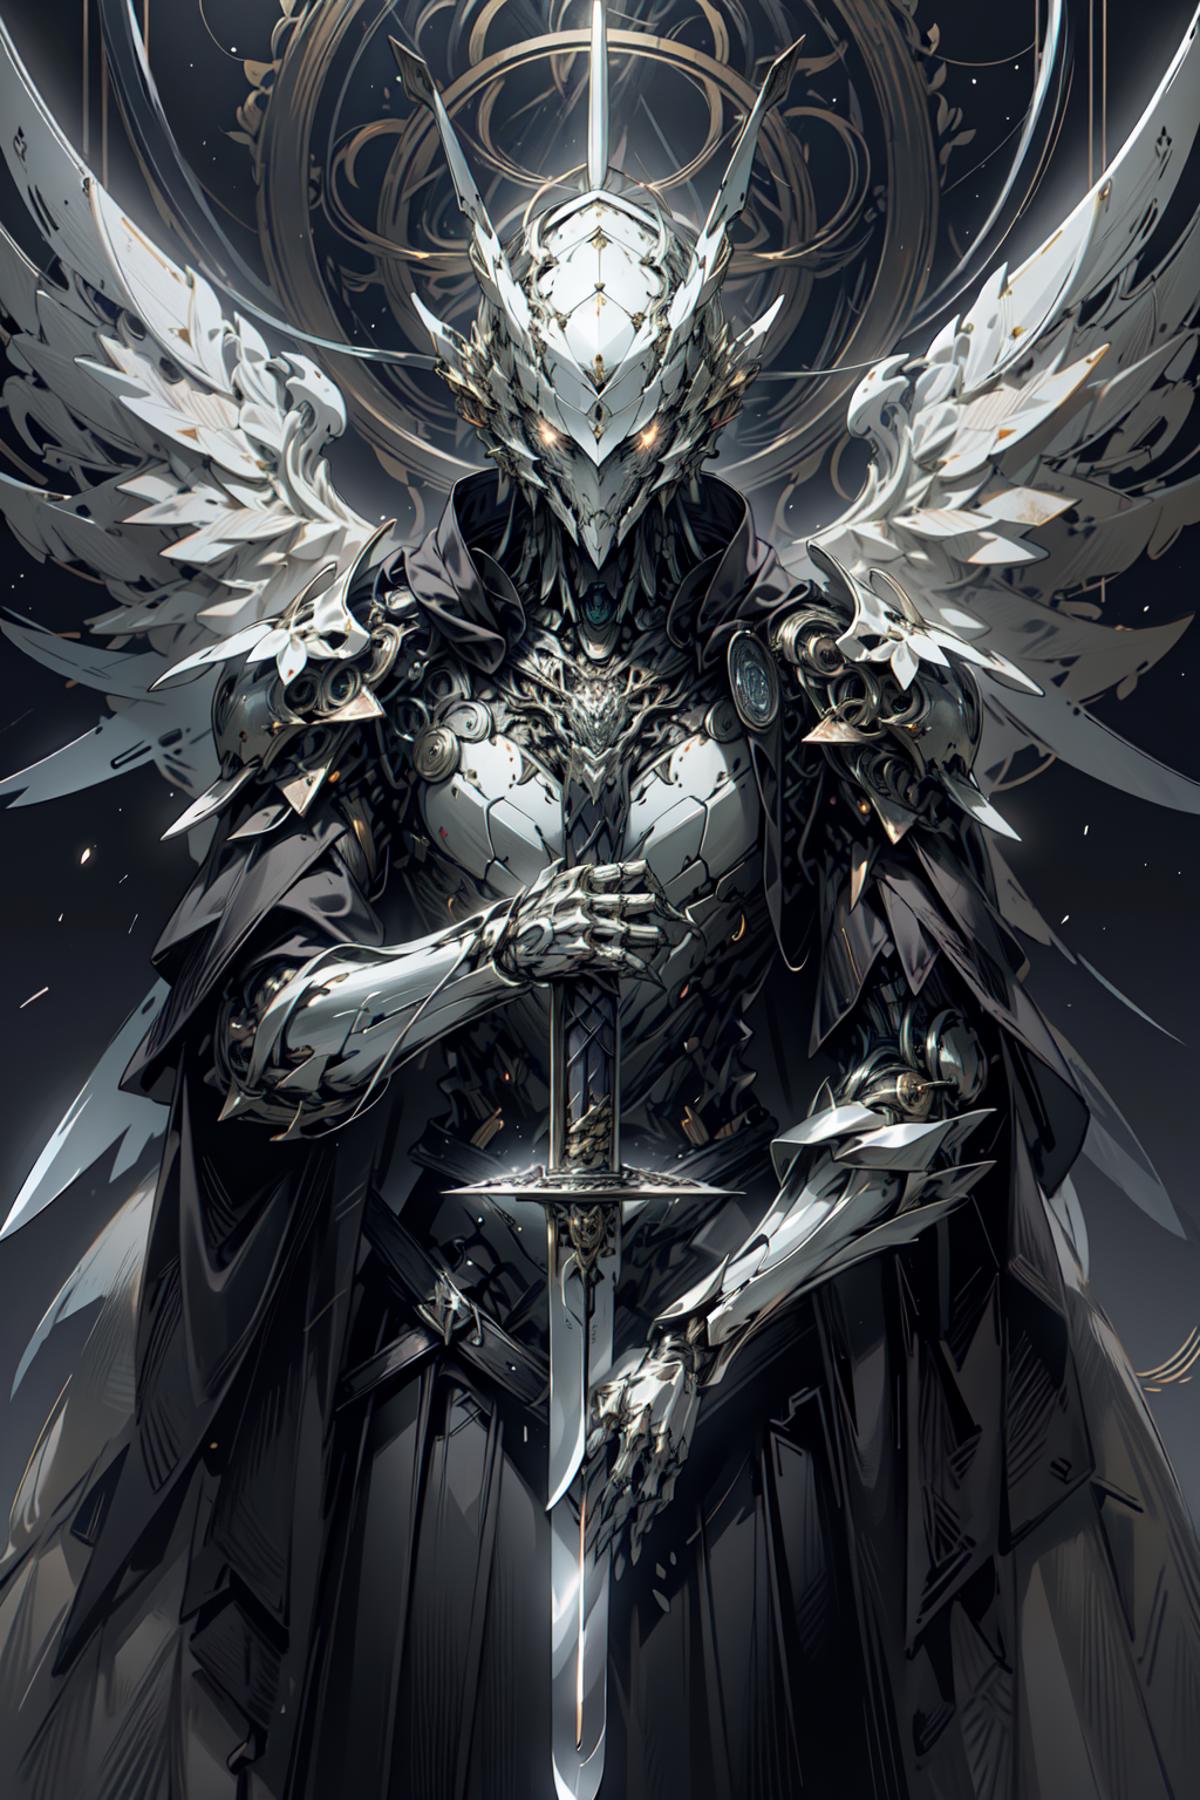 A Fantasy Illustration of a Warrior Angel Holding a Sword.